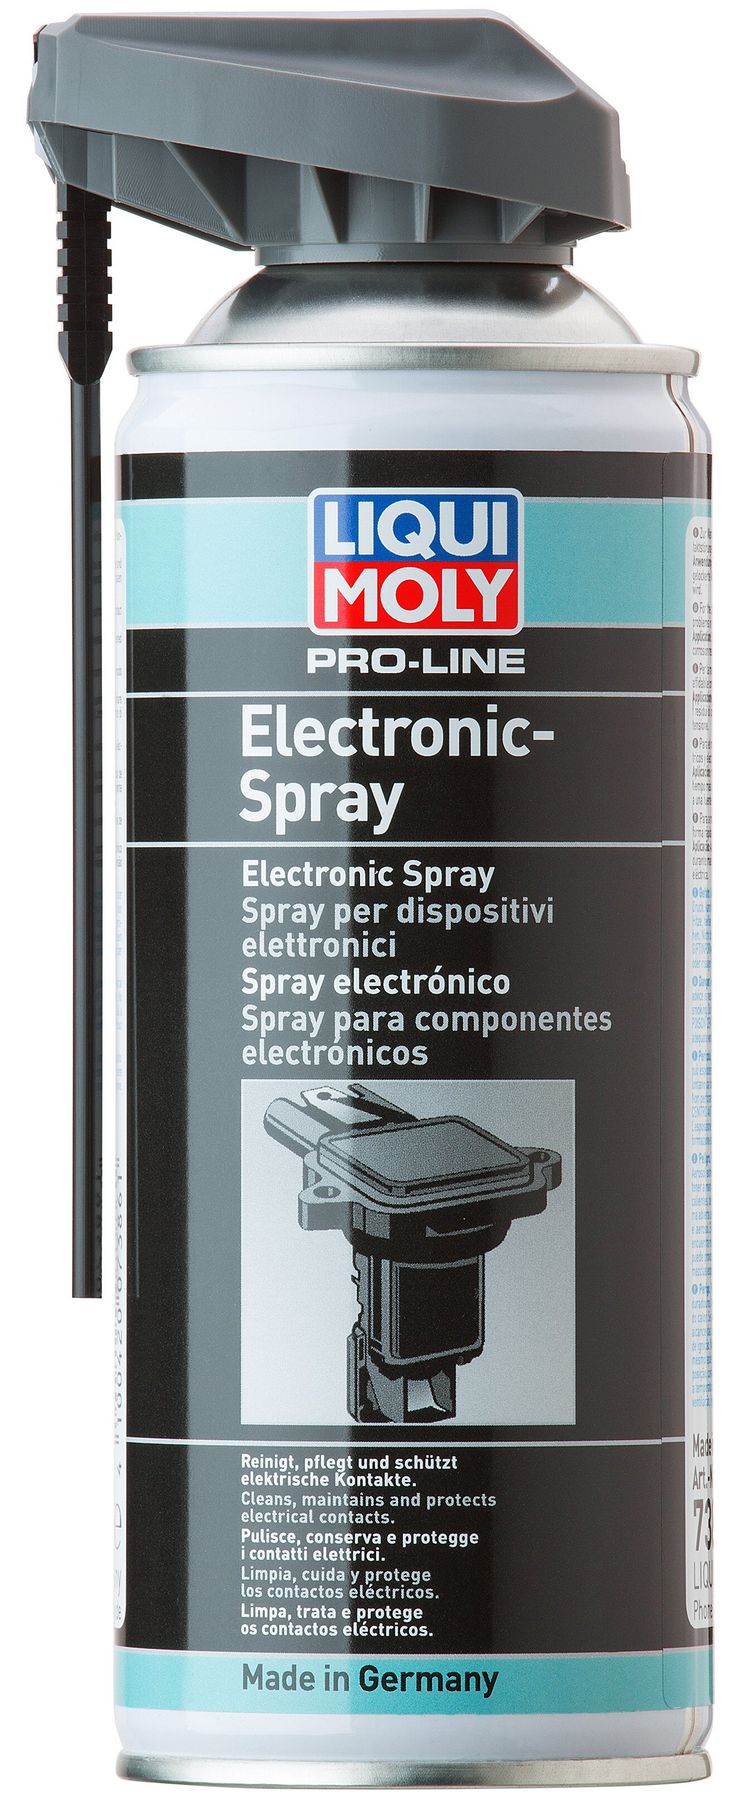 Liqui Moly Pro-Line Electronic-Spray - спрей для электропроводки, 0.4л .